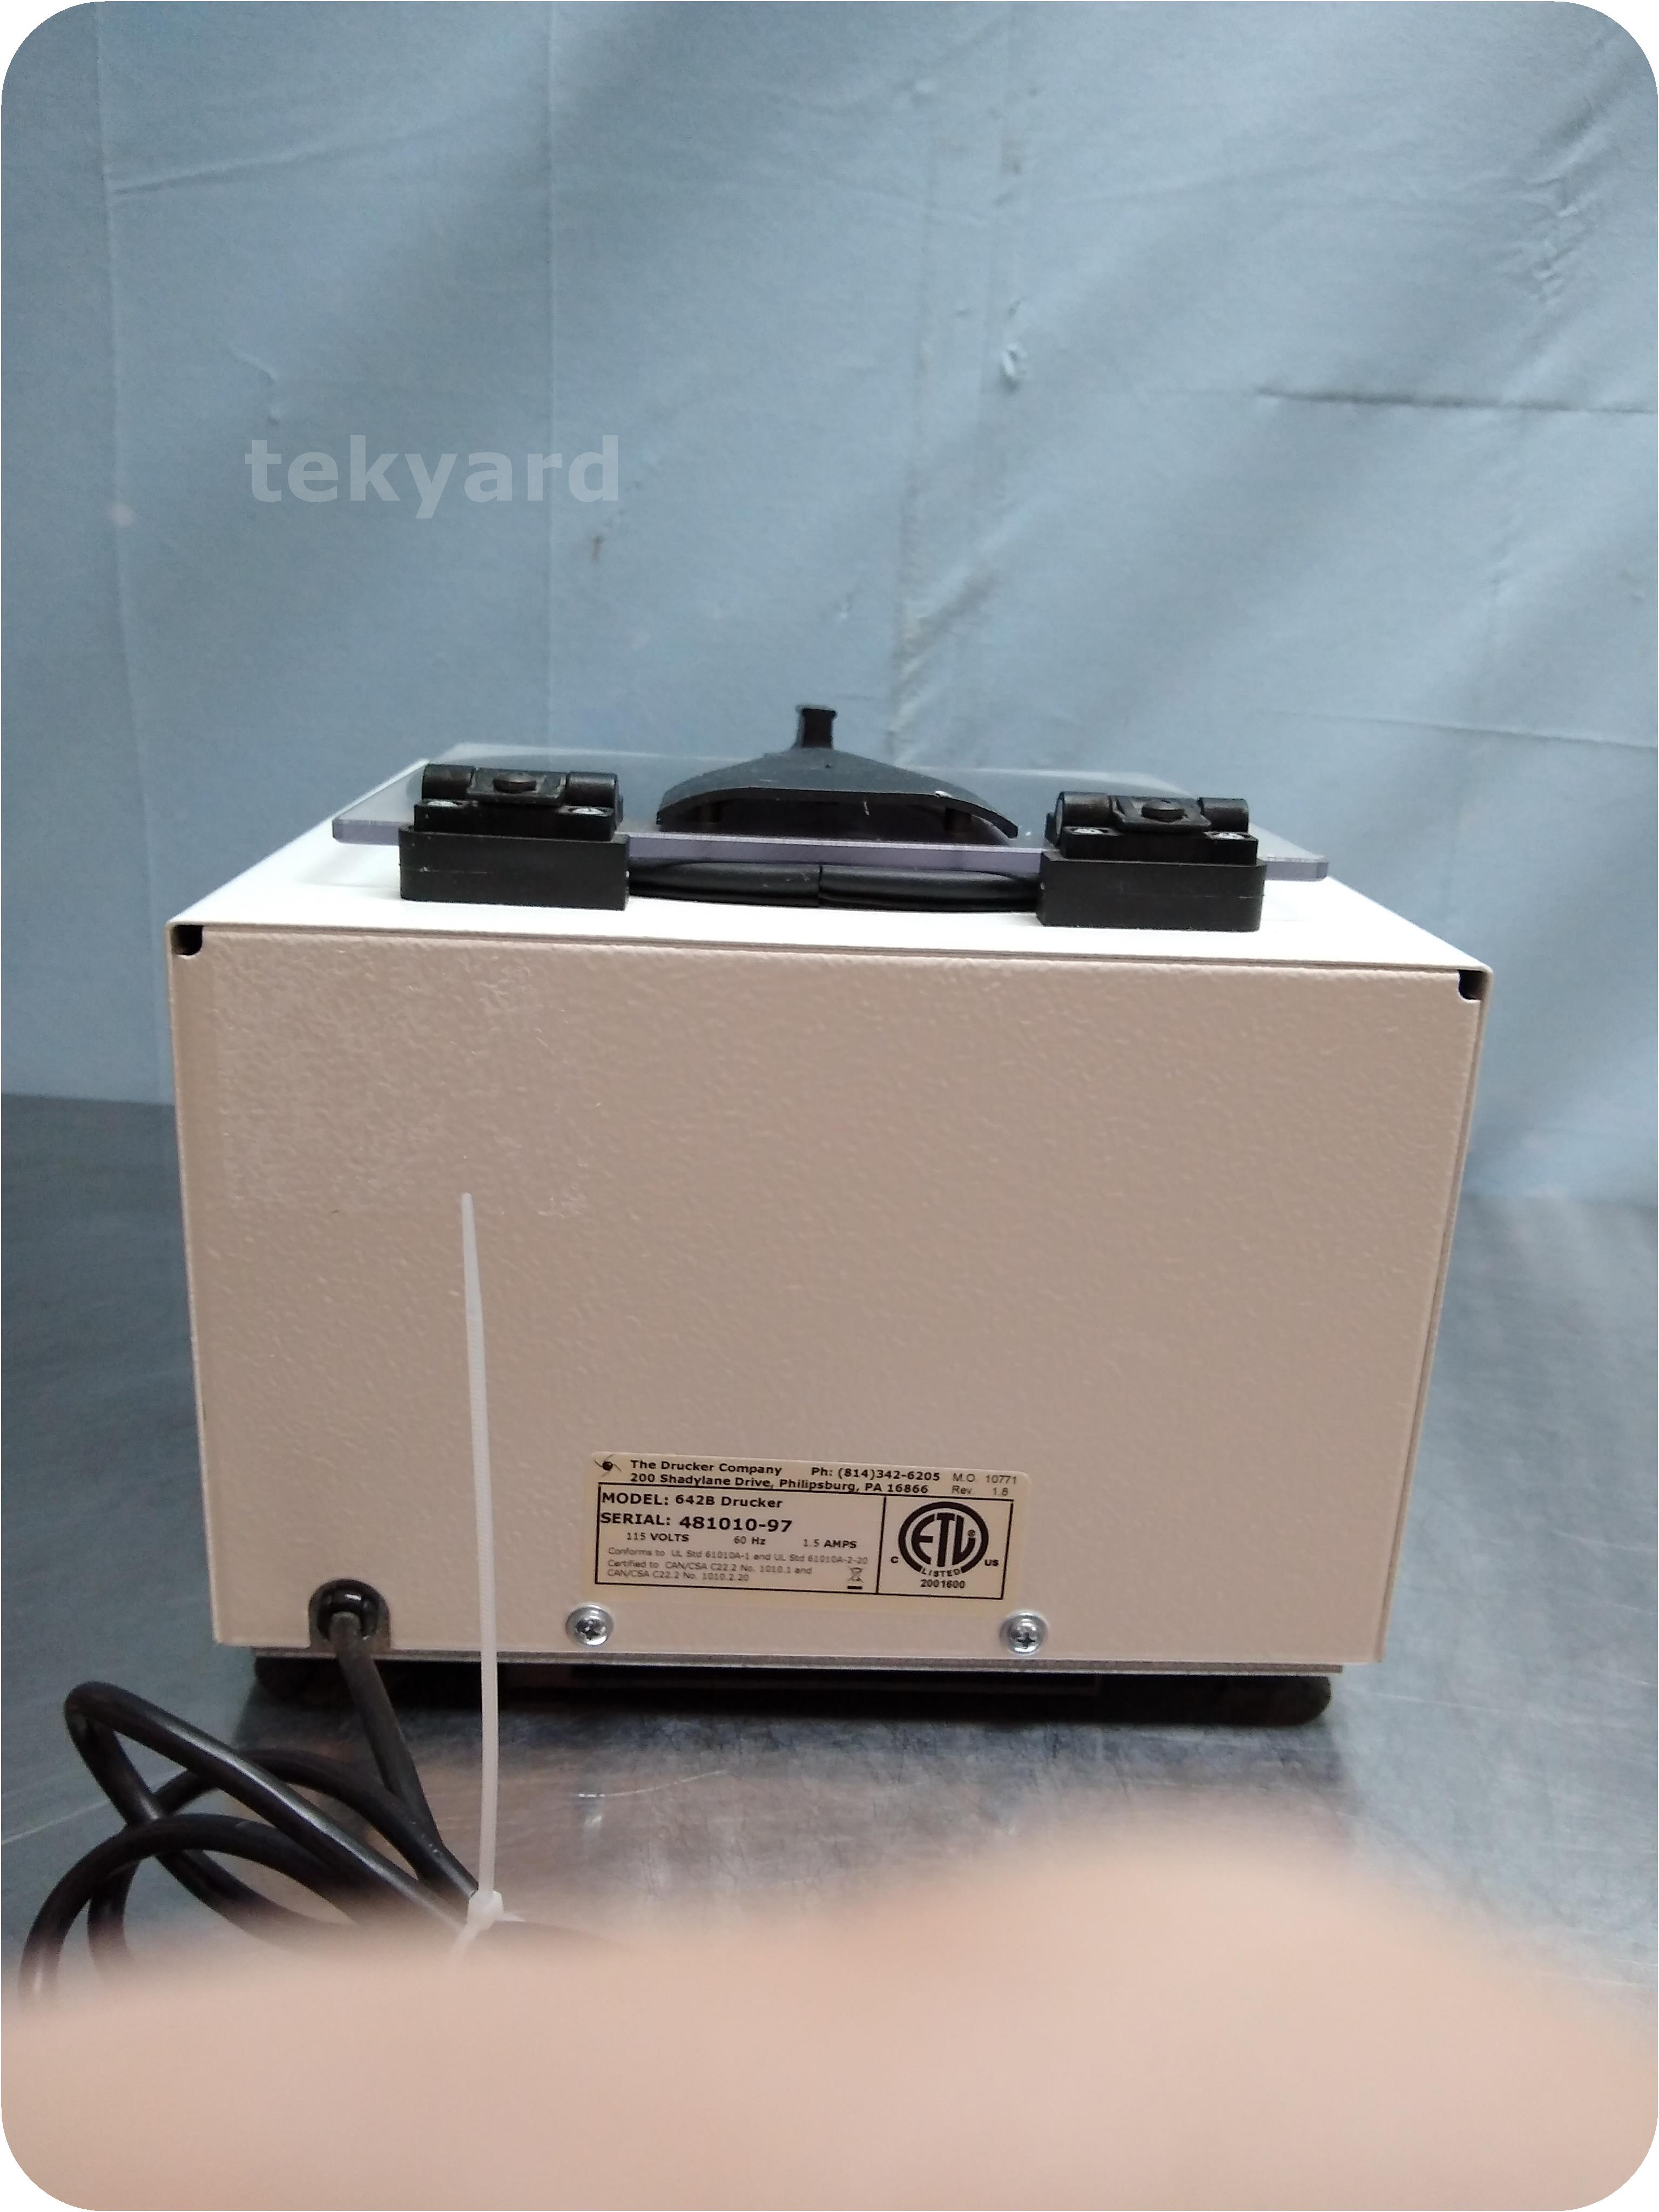 tekyard, LLC. - 280662-The Drucker Horizon 642B mini B Clinical